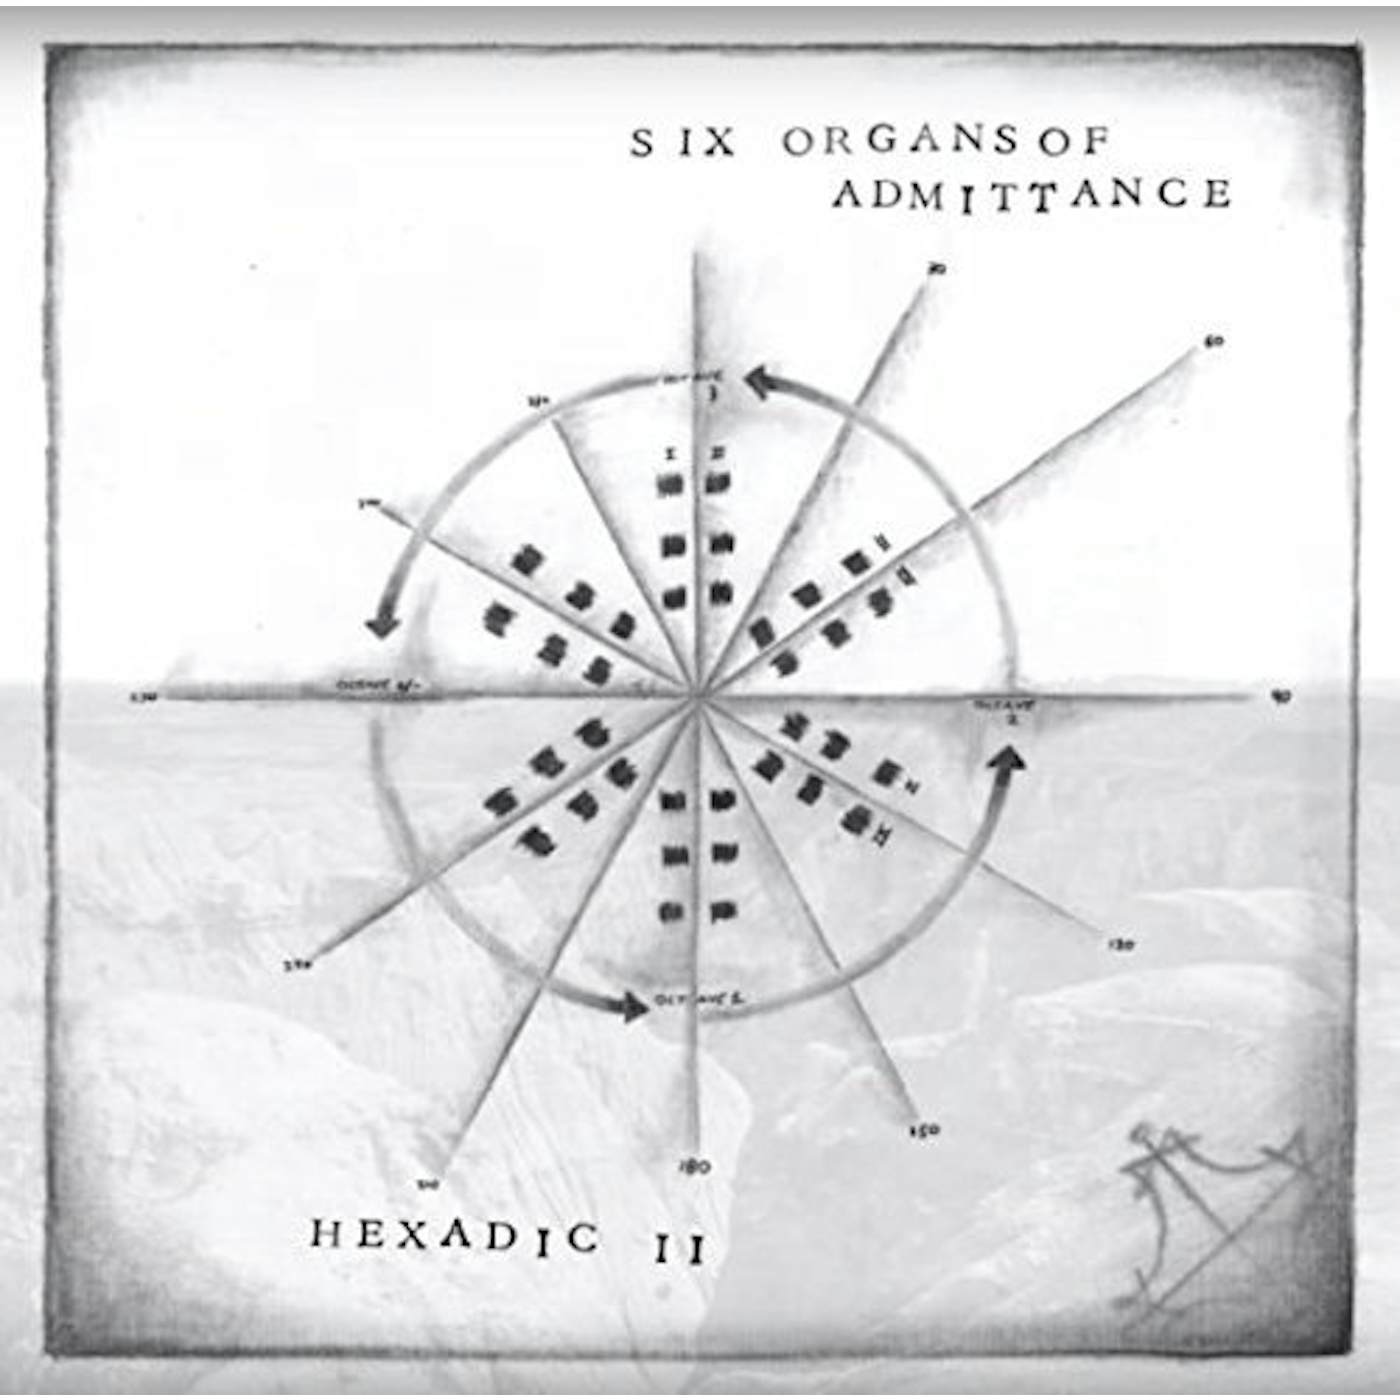 Six Organs Of Admittance Hexadic II Vinyl Record